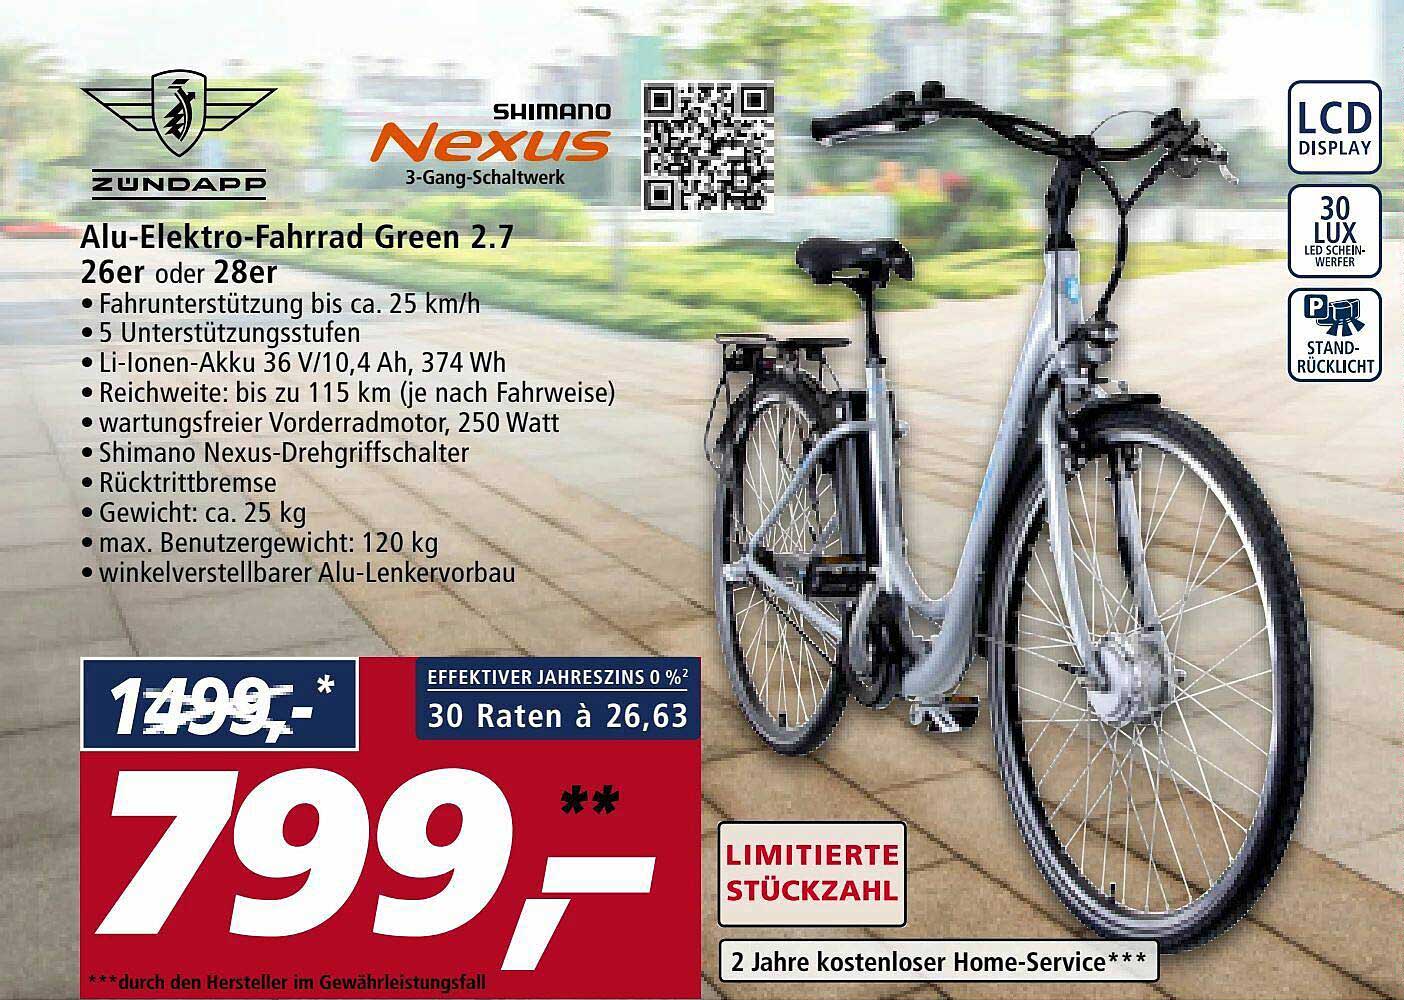 Real Zündapp Alu-elektro-fahrrad Green 2.7